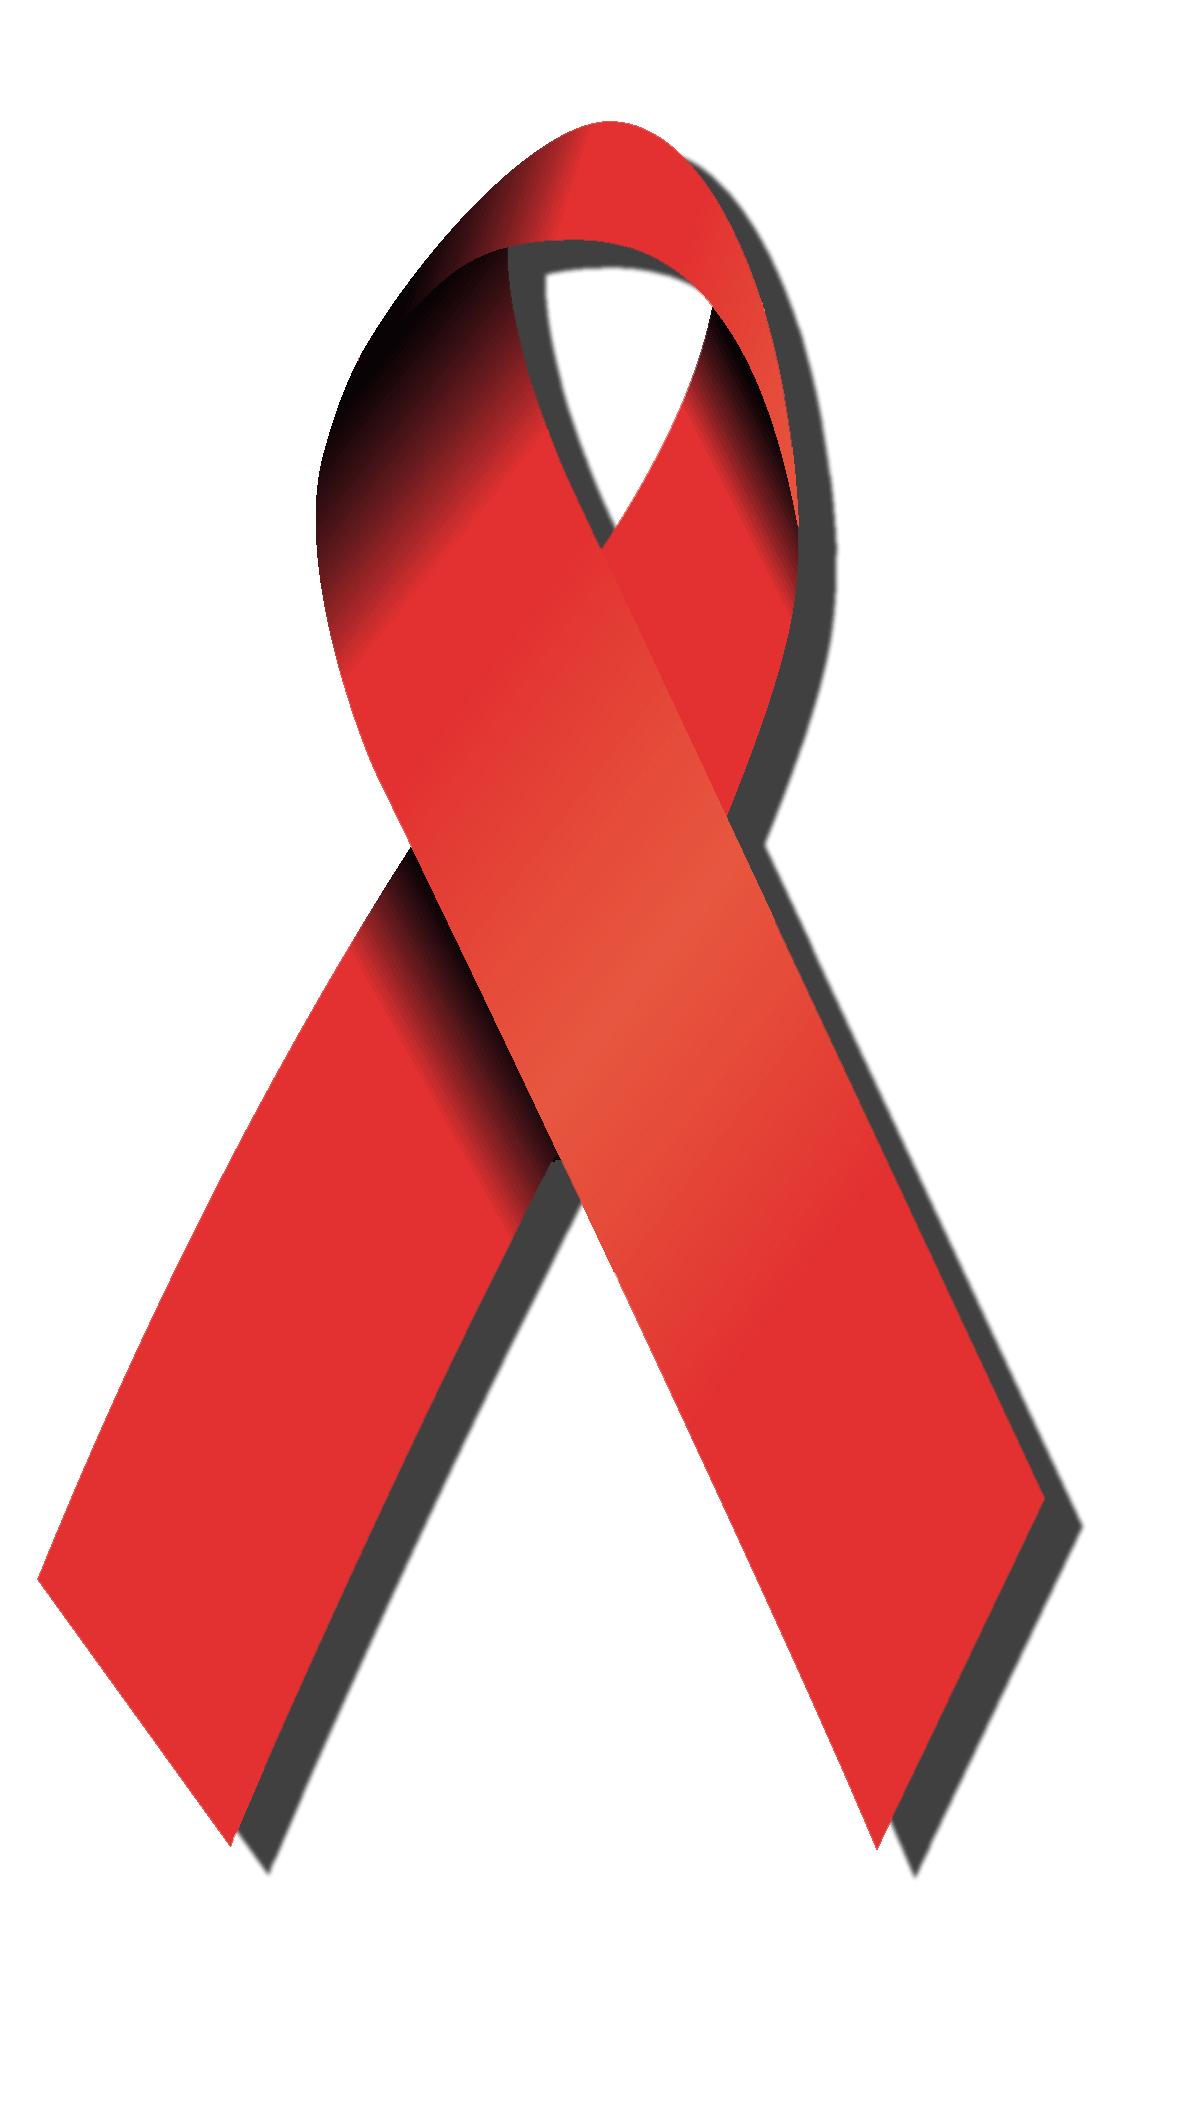 aids-ribbon